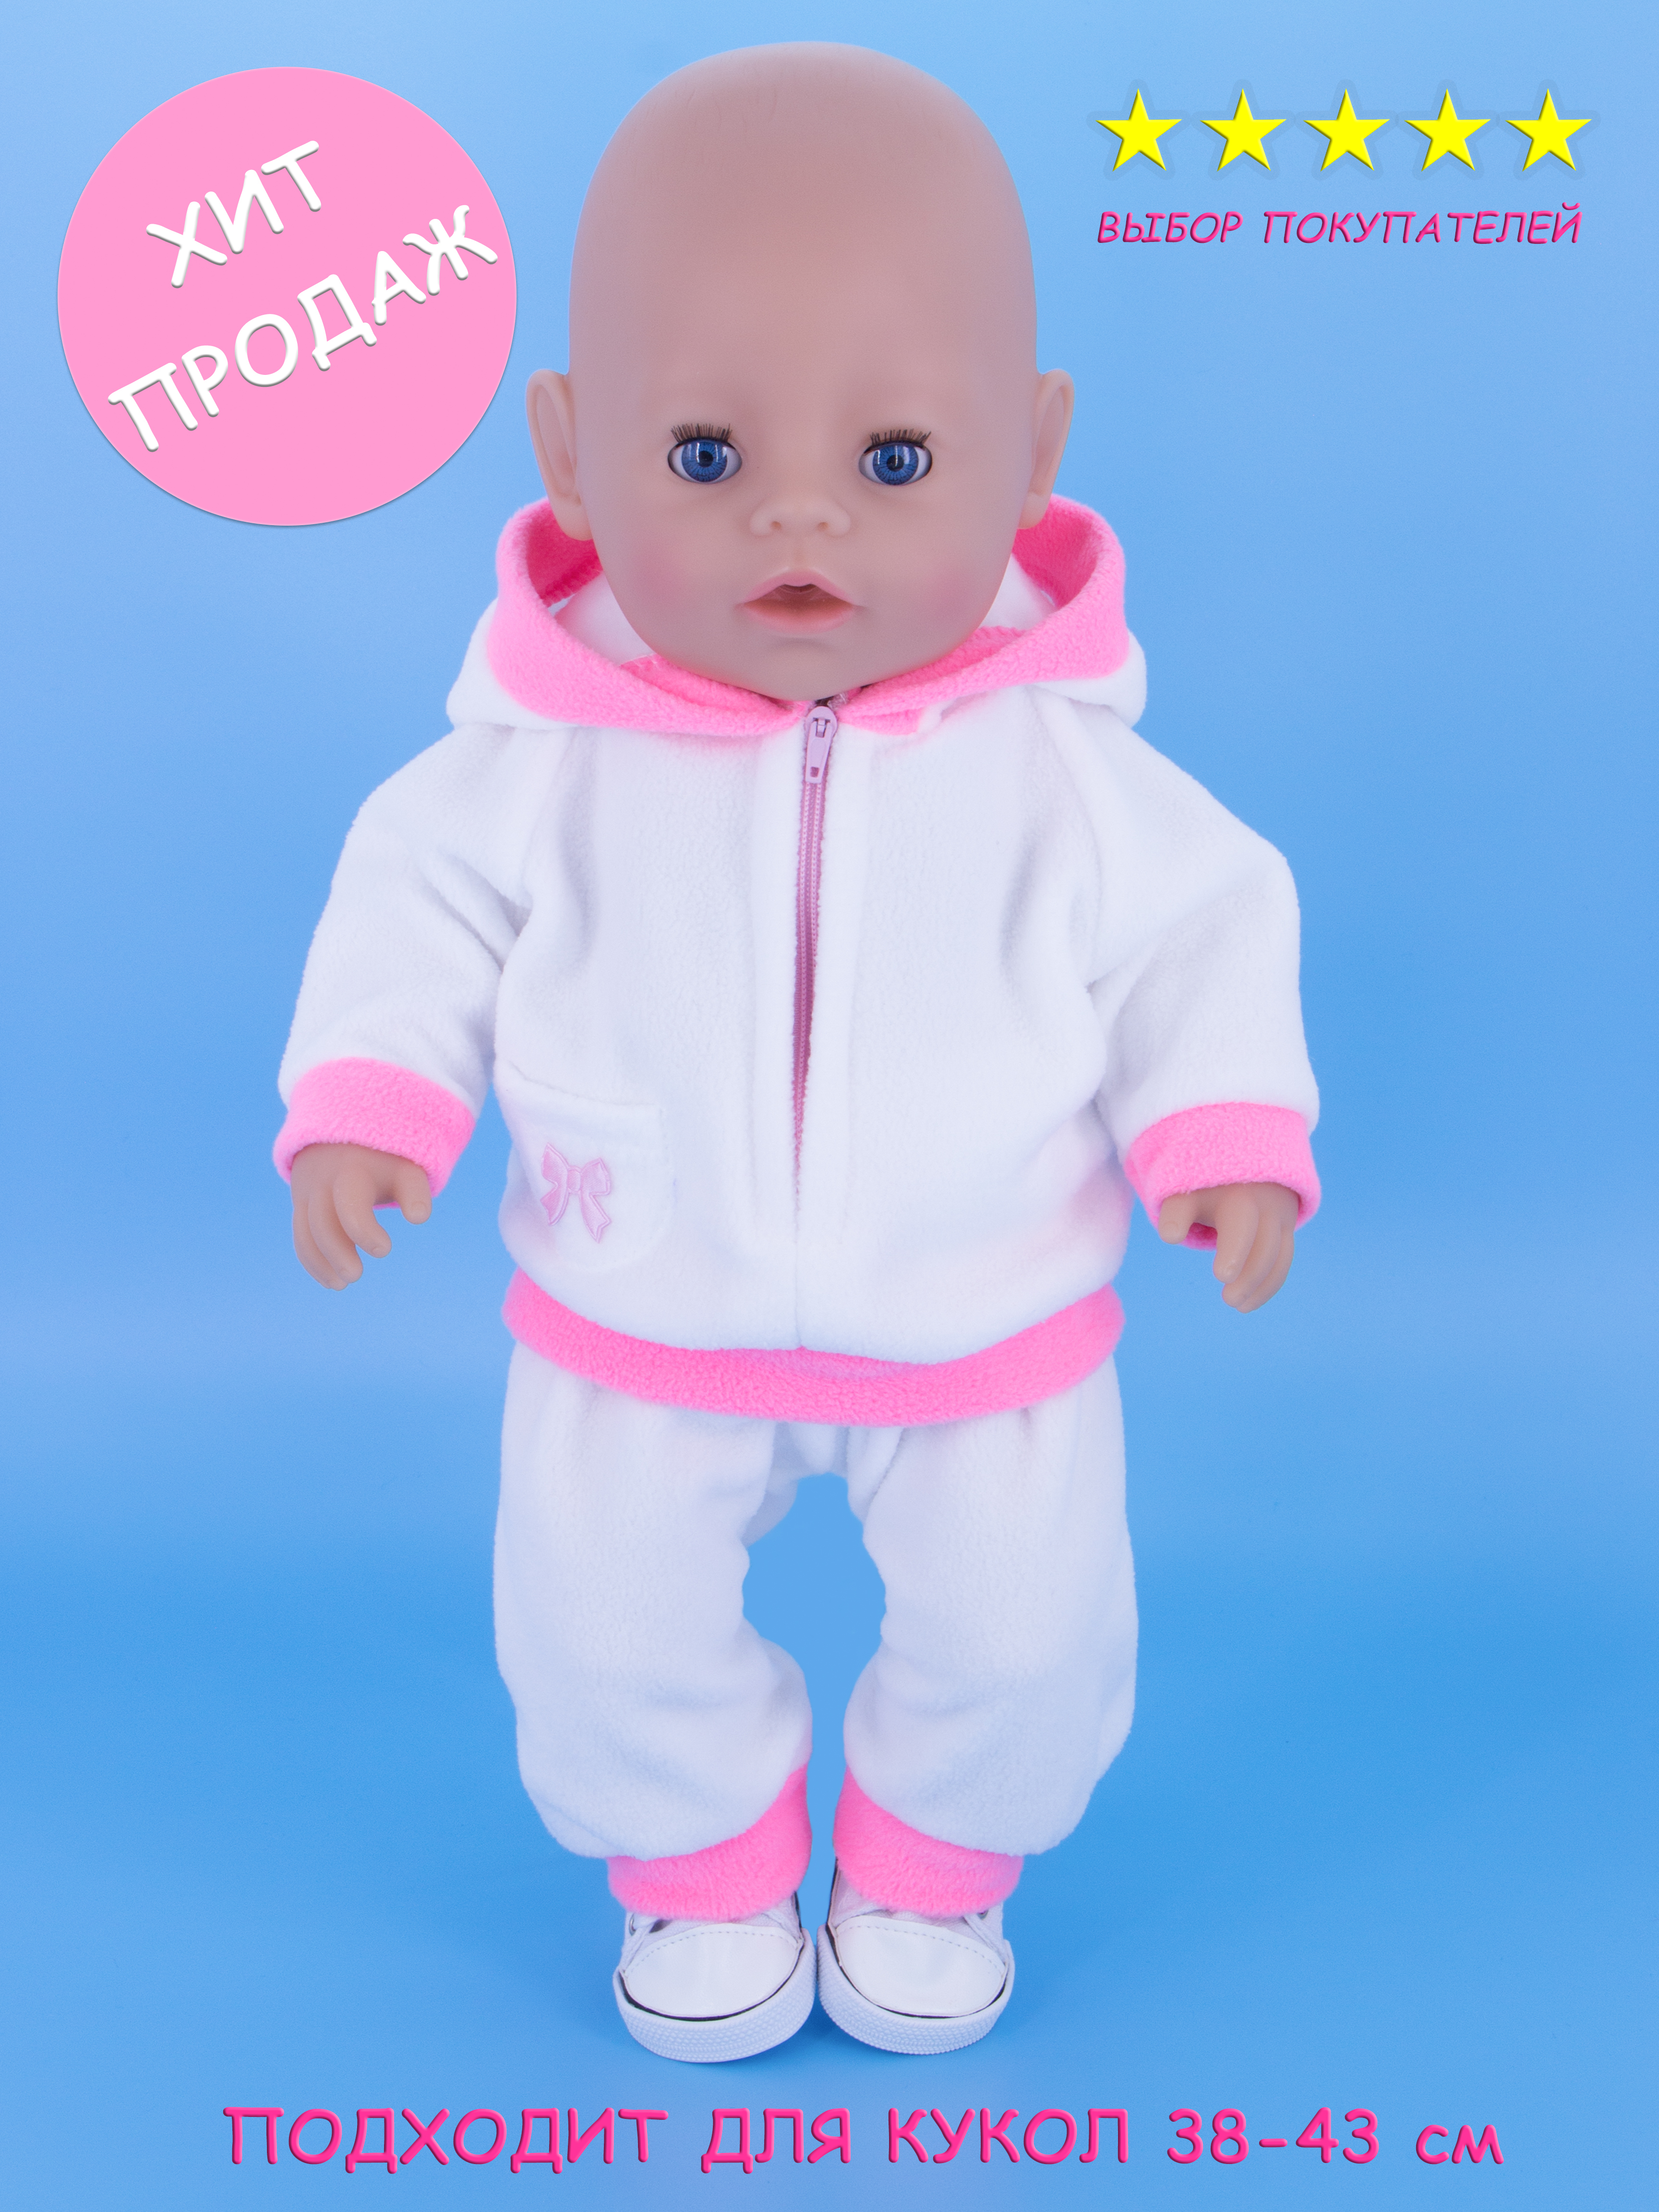 МК Штанишки спицами для беби бона - YouTube | Вещи для кукол, Пупс, Одежда для кукол